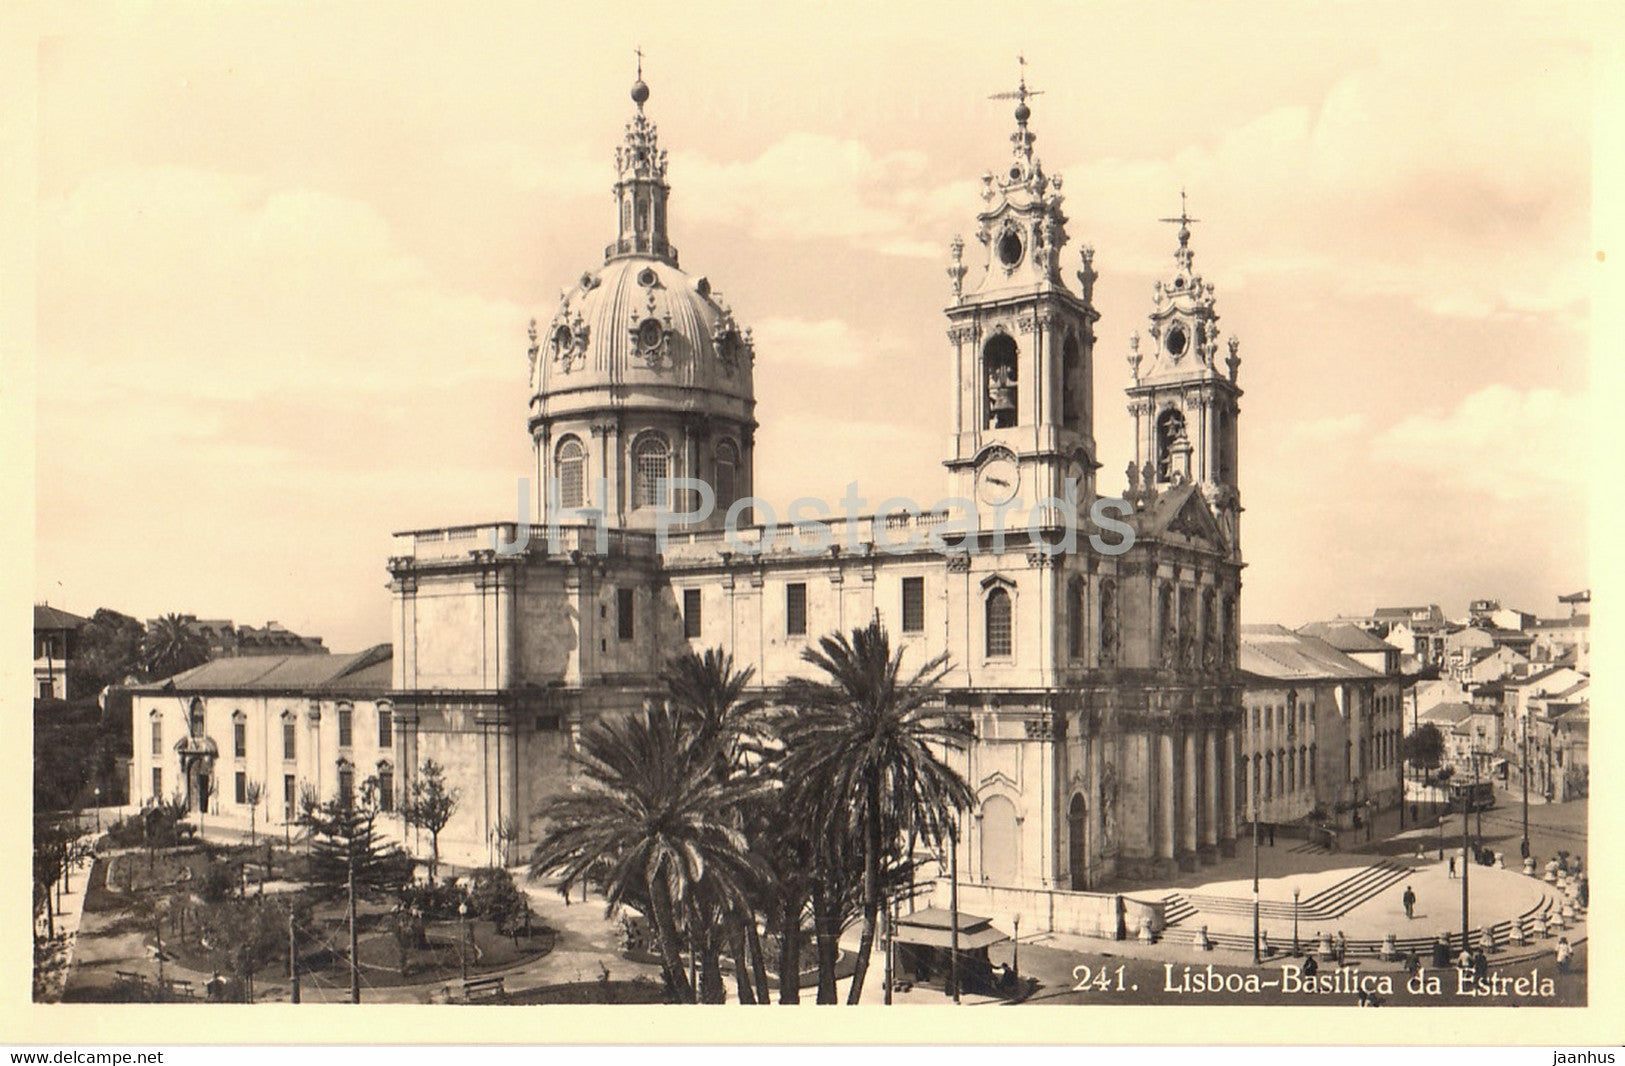 Lisboa - Lisbon - Basilica da Estrela - 241 - old postcard - Portugal - unused - JH Postcards